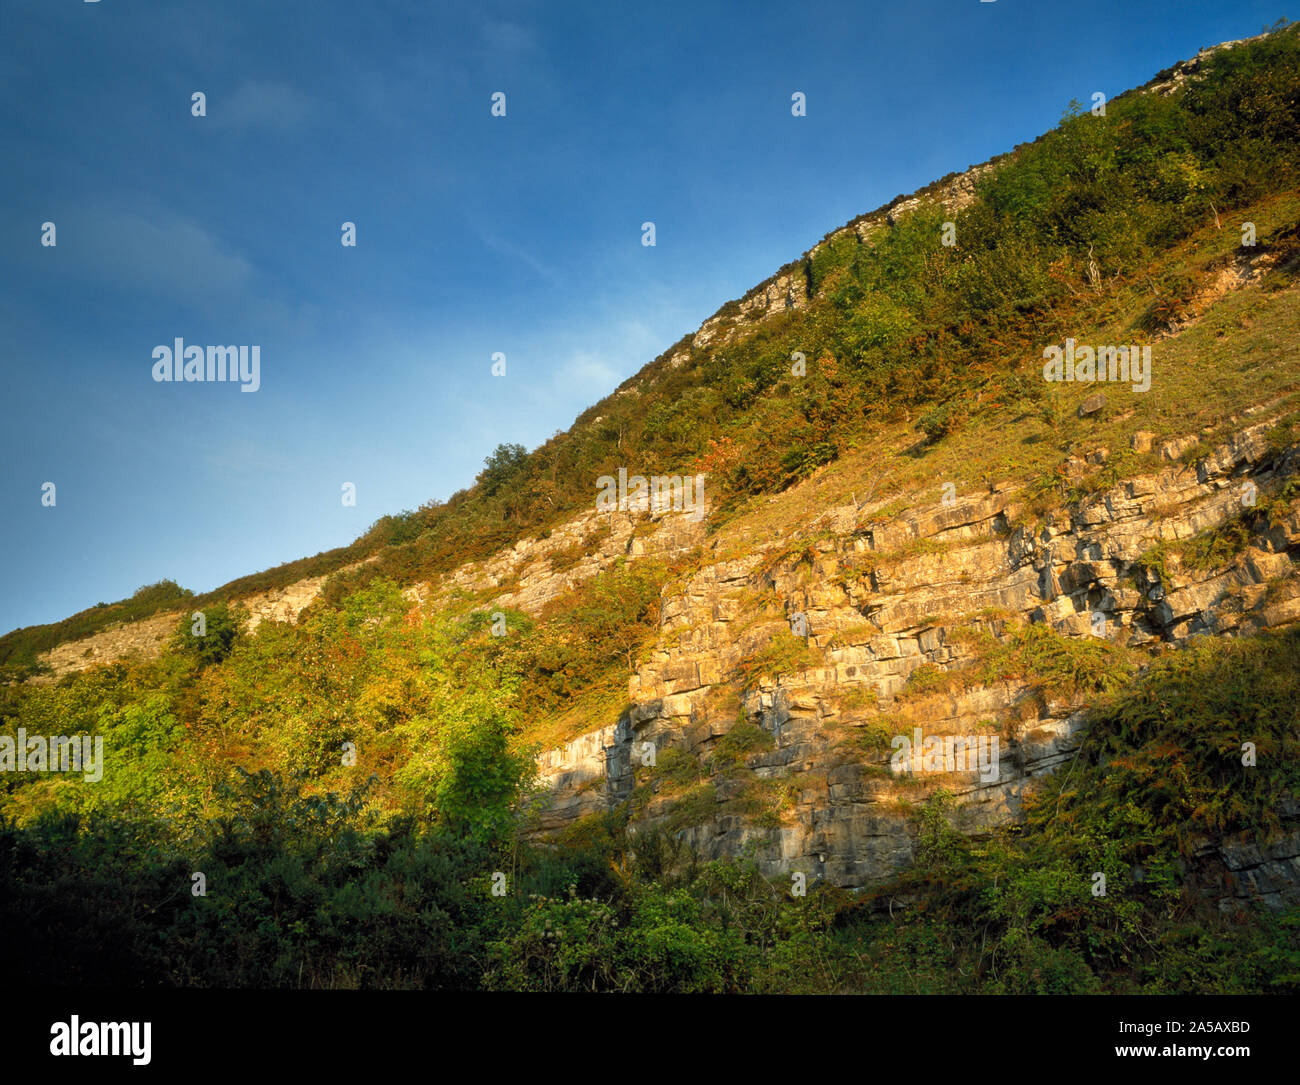 Manor Quarry, Prestatyn Hillside, Prestatyn, Denbighshire, North Wales. Carboniferous limestone escarpment becoming overgrown by scrub & trees Stock Photo